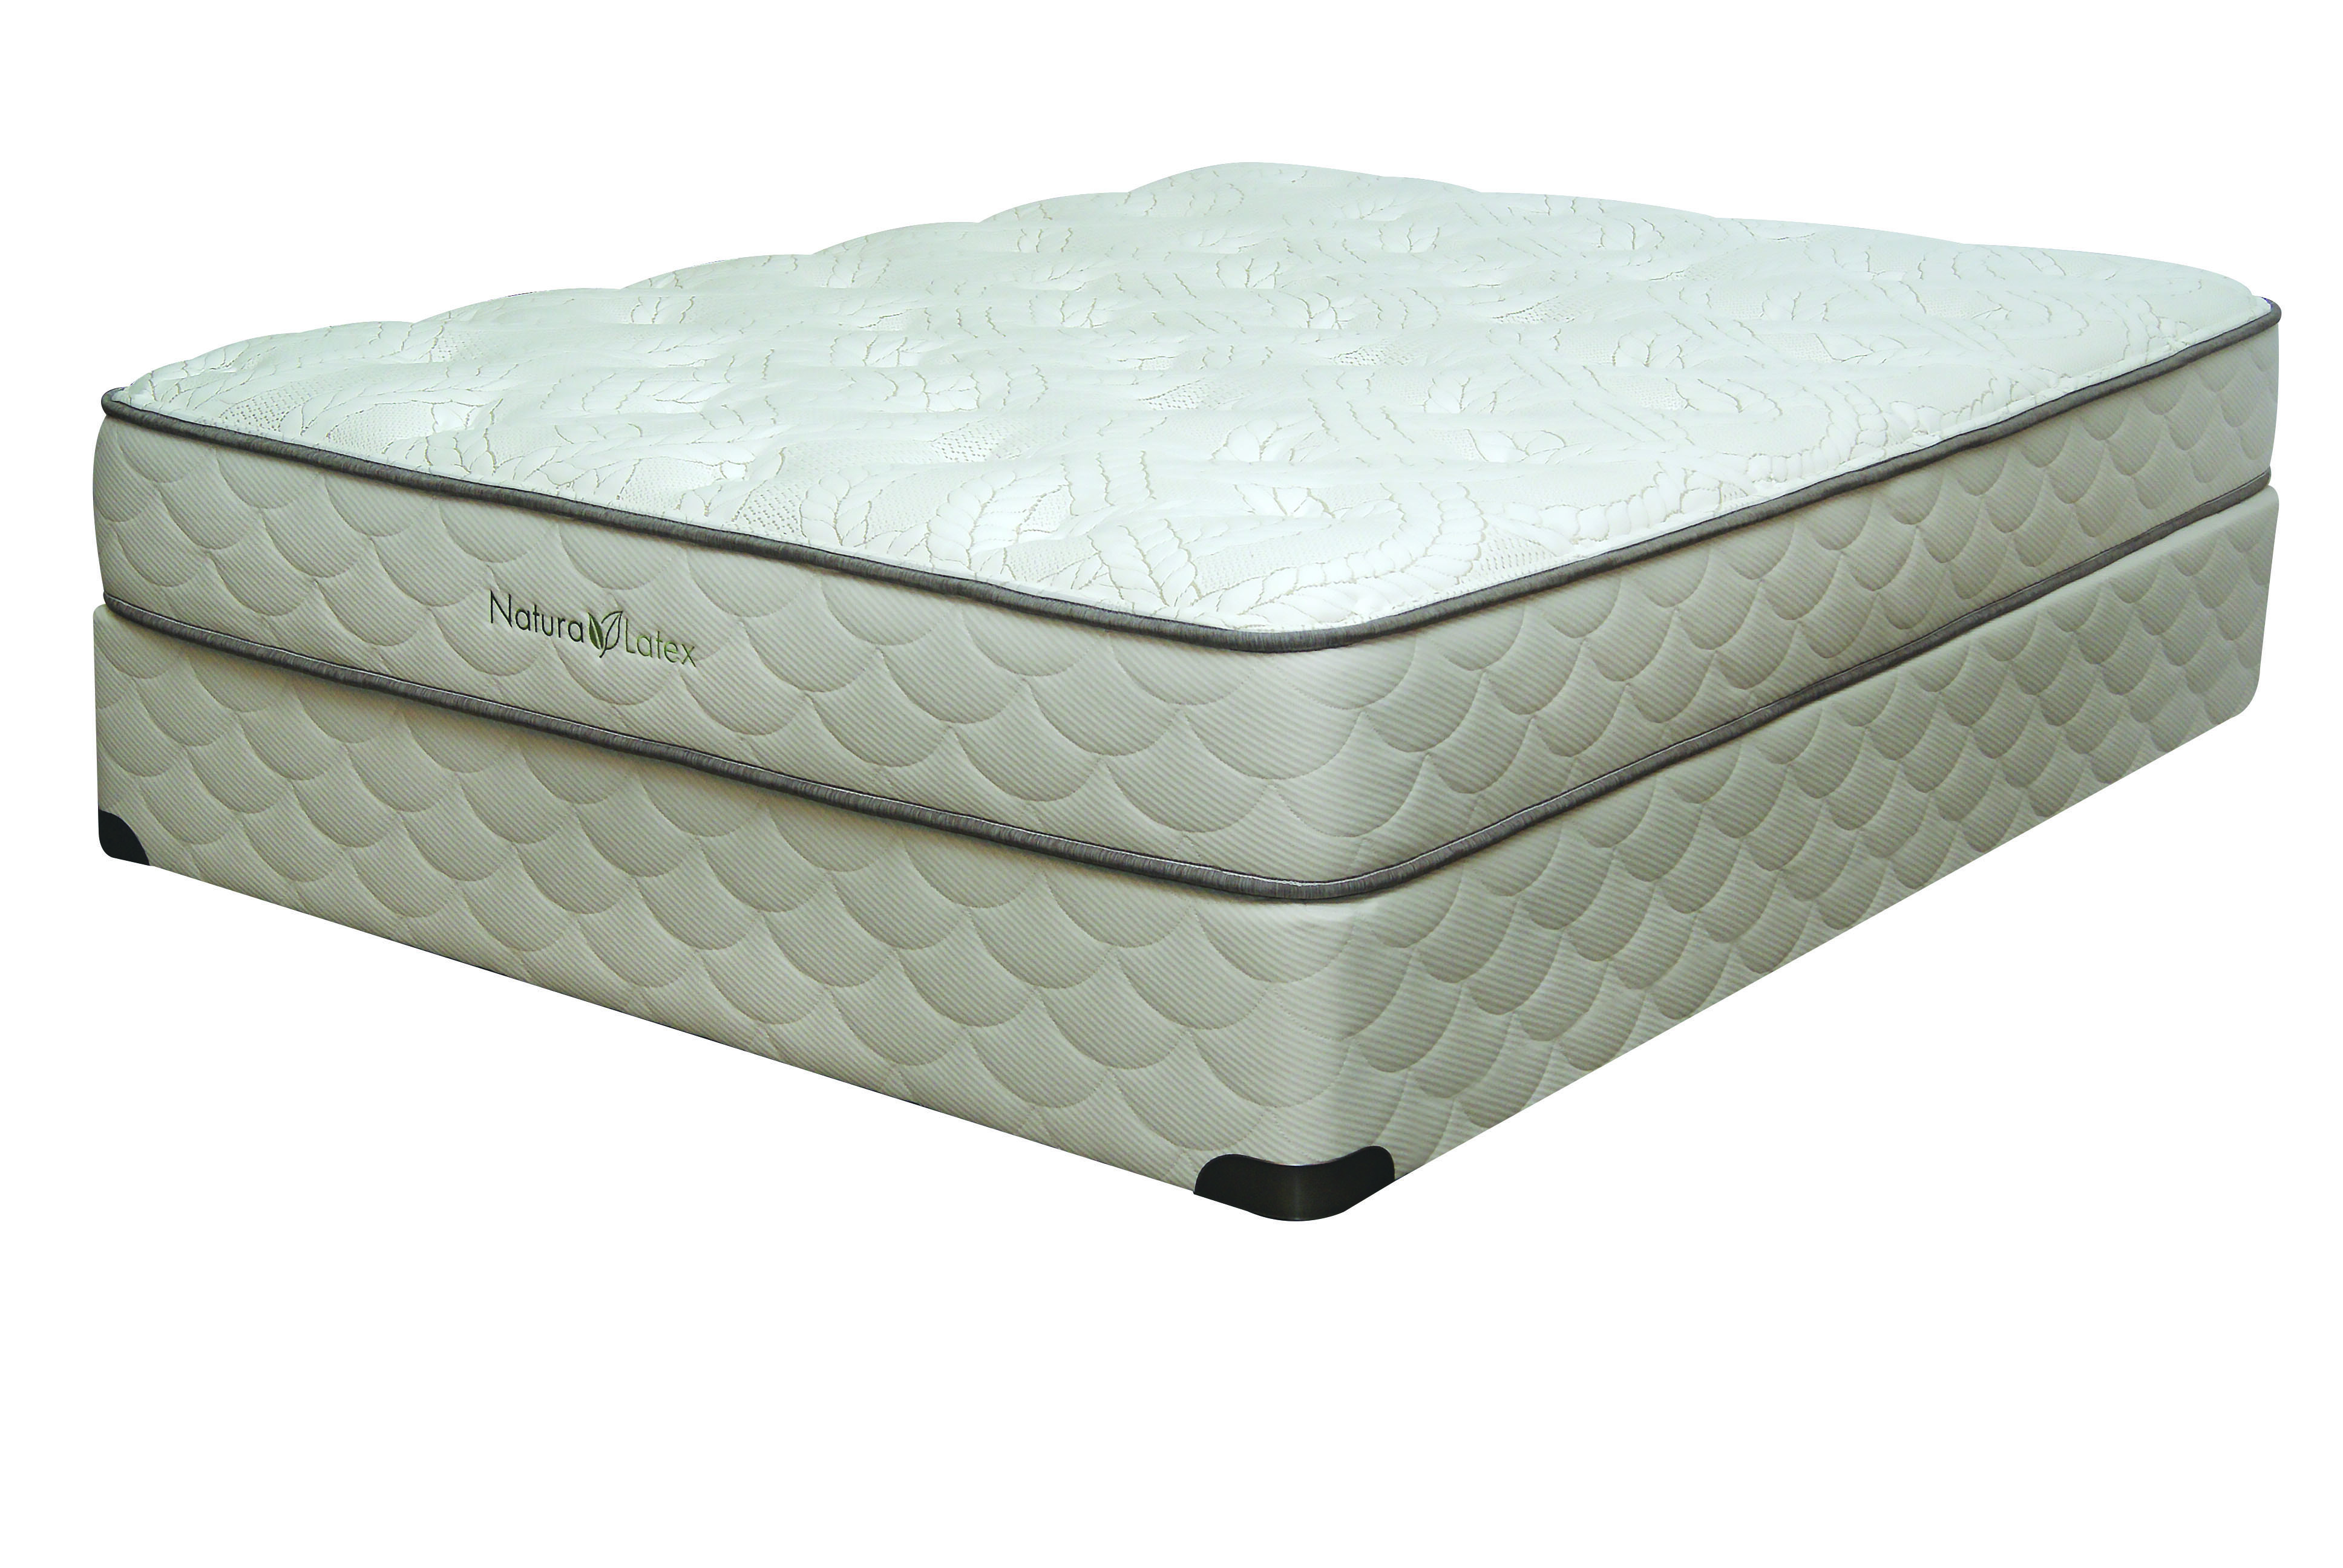 firm latex mattress topper costco